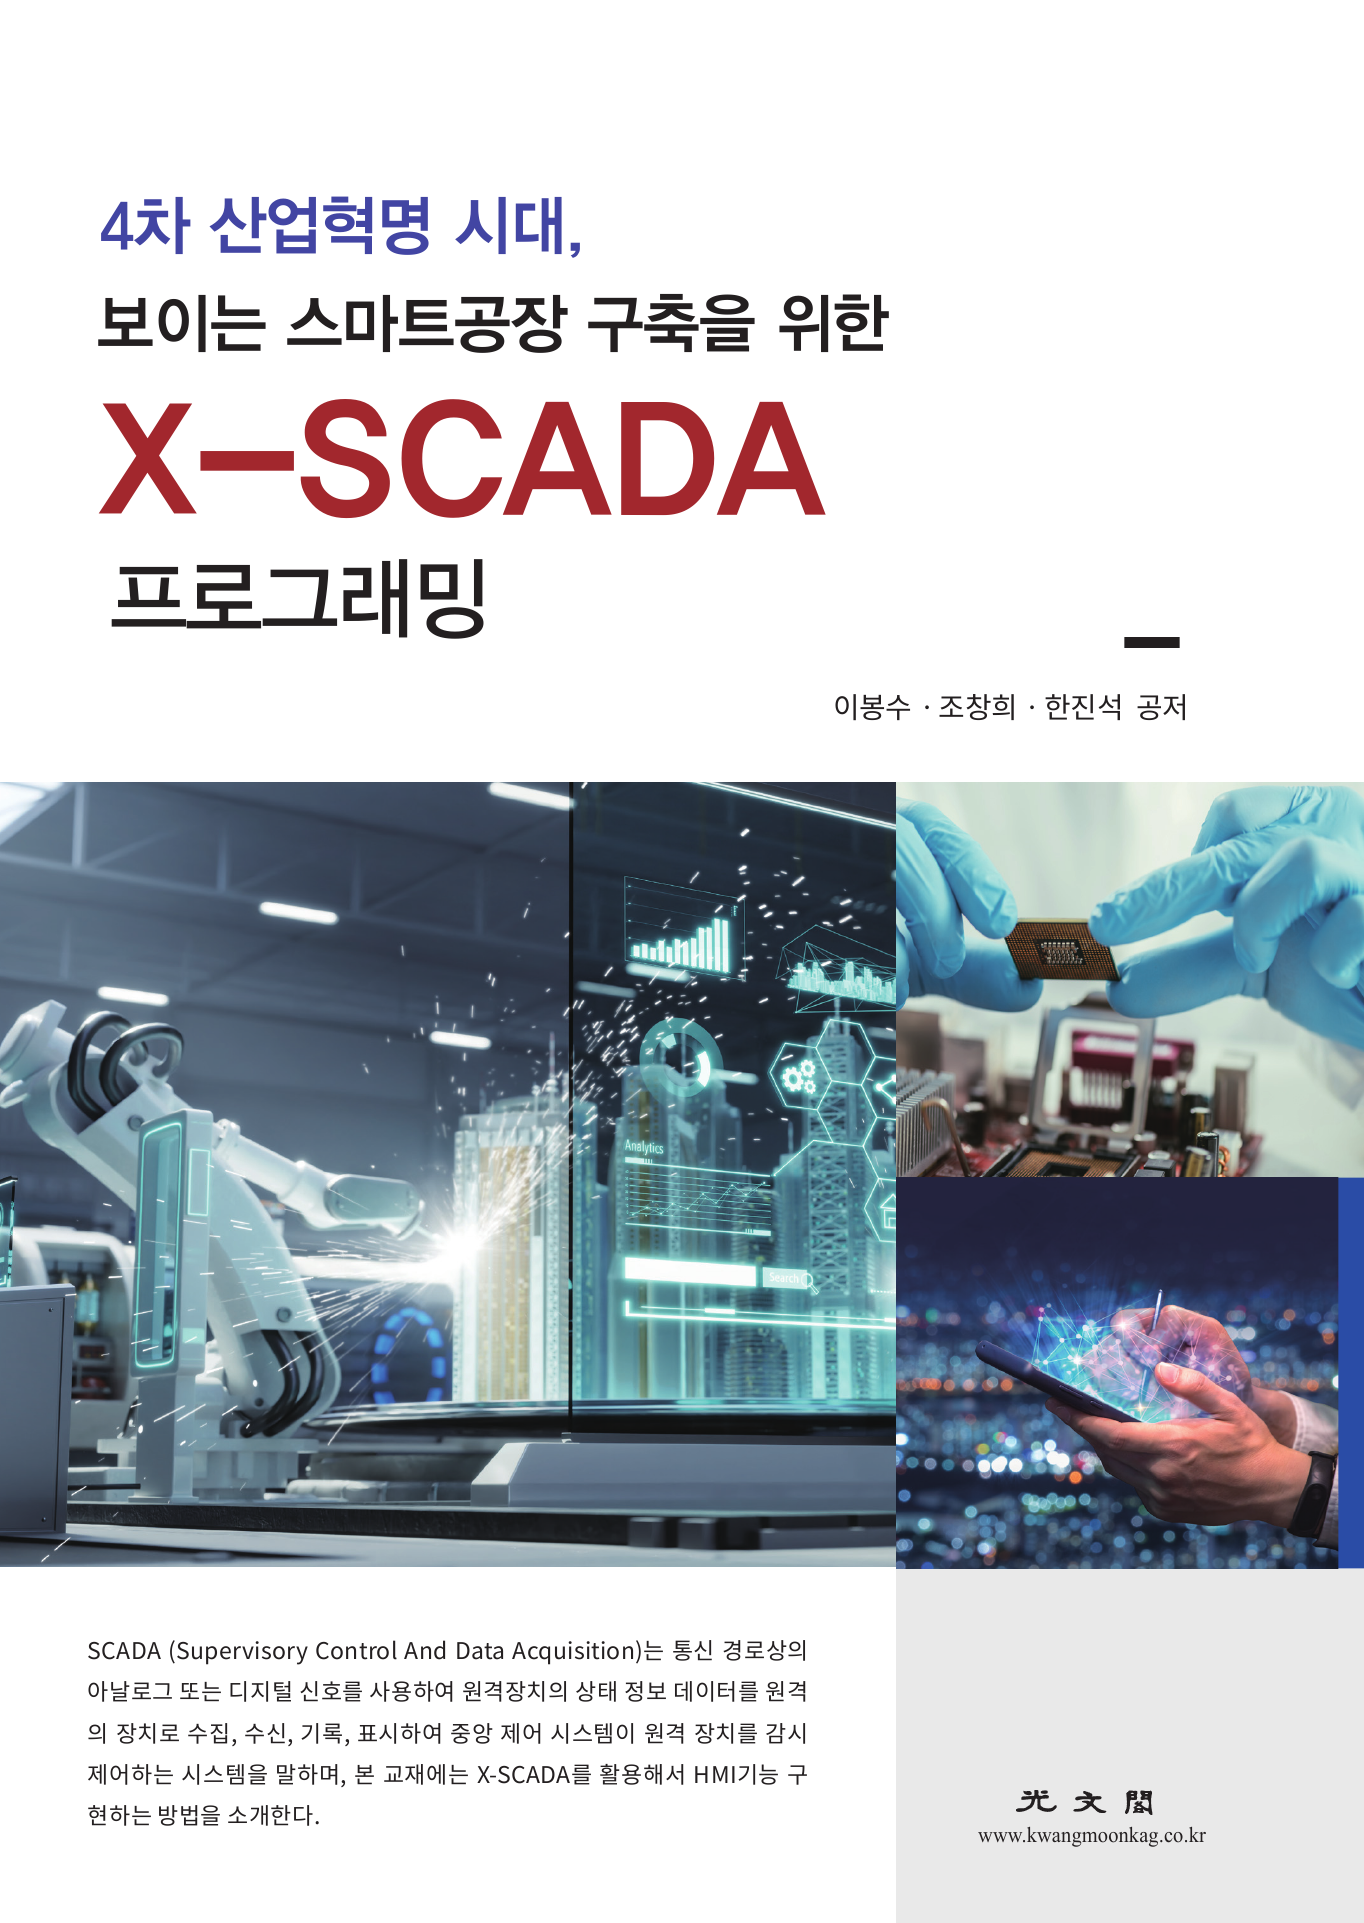 X-SCADA 프로그래밍 (4차 산업혁명 시대, 보이는 스마트공장 구축을 위한)